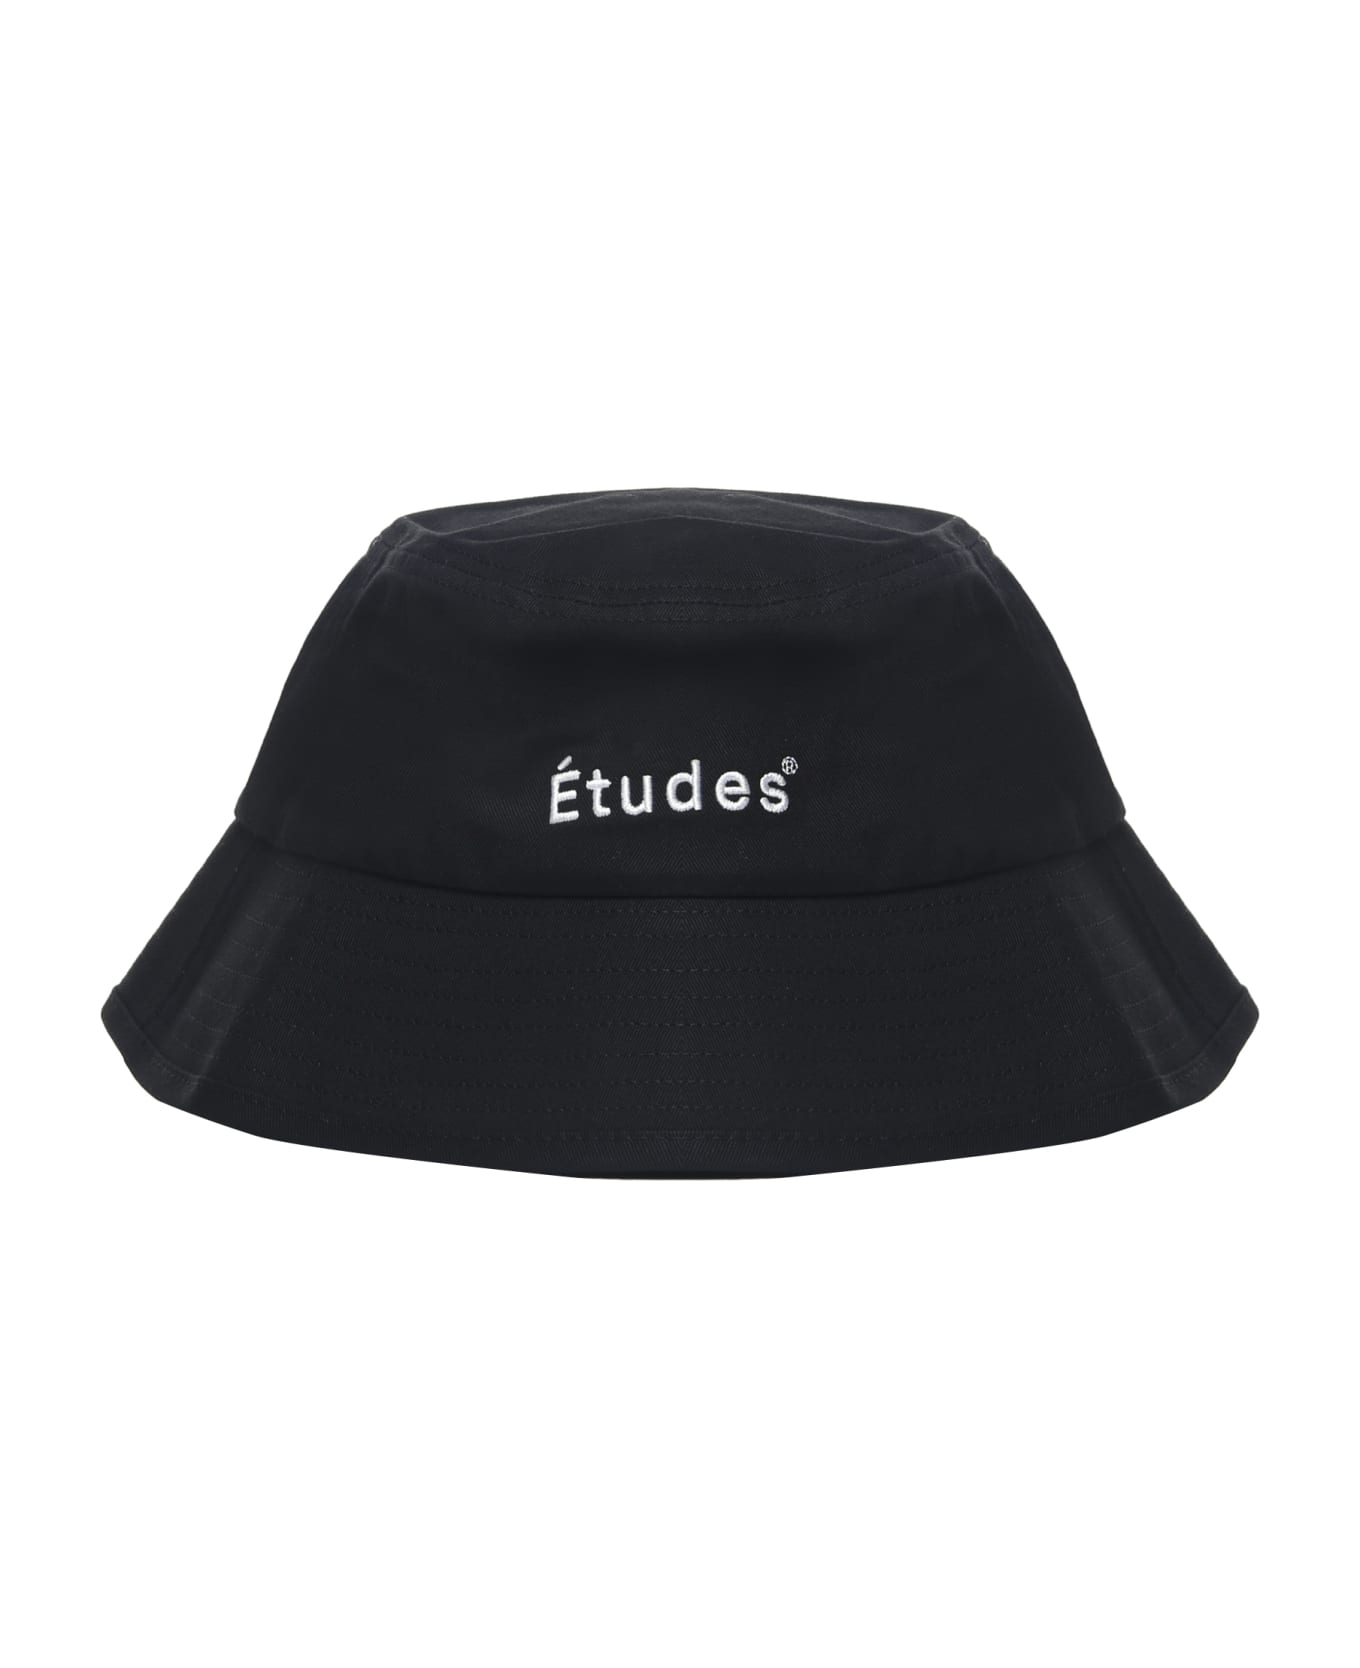 Études Bucket Hat With Logo - Black